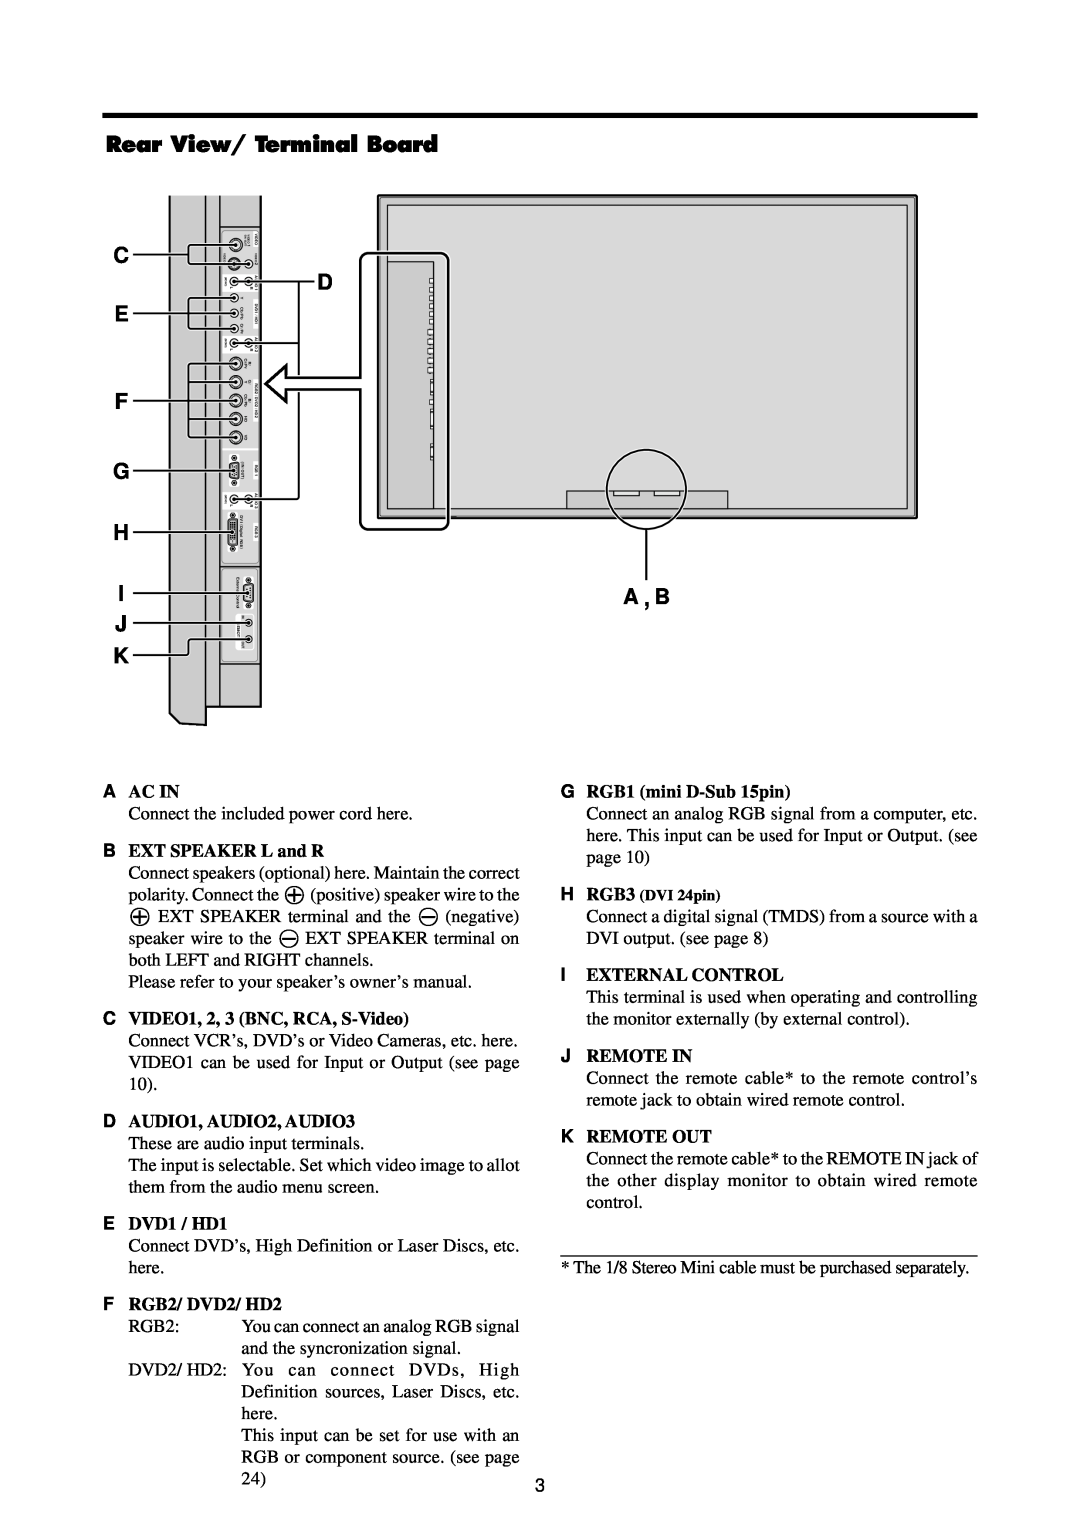 Marantz PD6140D manual Rear View/ Terminal Board, C E F G H I J K, D A B 